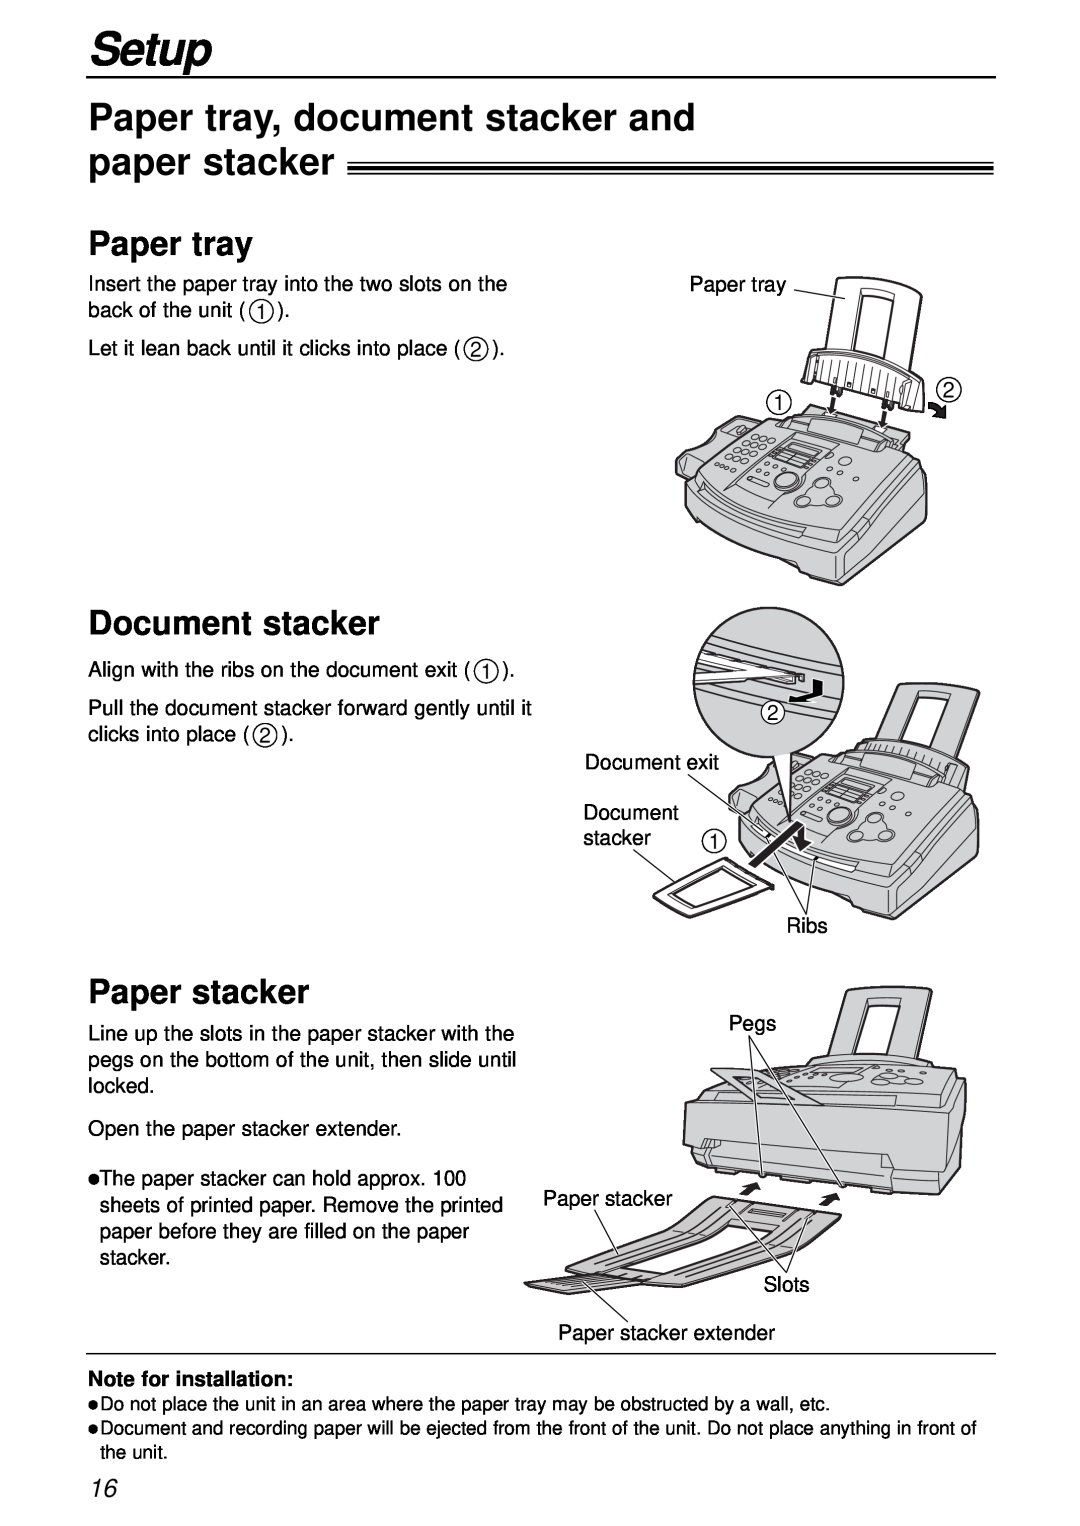 Panasonic KX-FL501AL, KX-FL501NZ Paper tray, document stacker and paper stacker, Document stacker, Paper stacker, Setup 